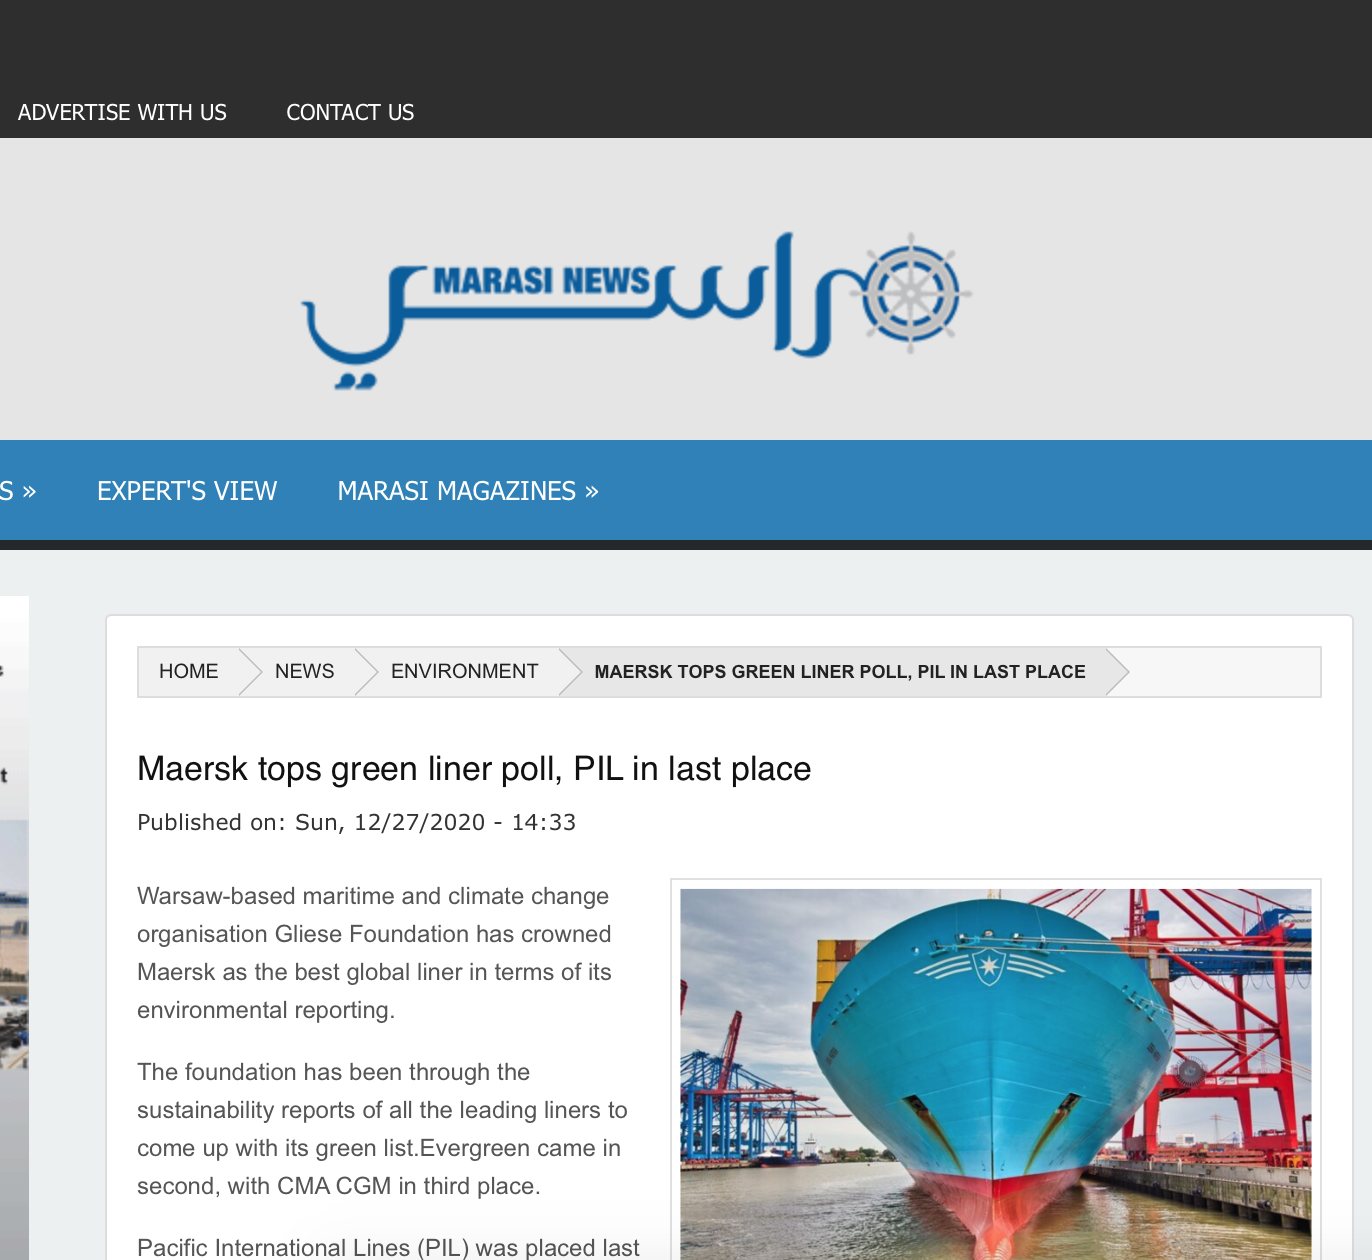 Marasi News from the UAE